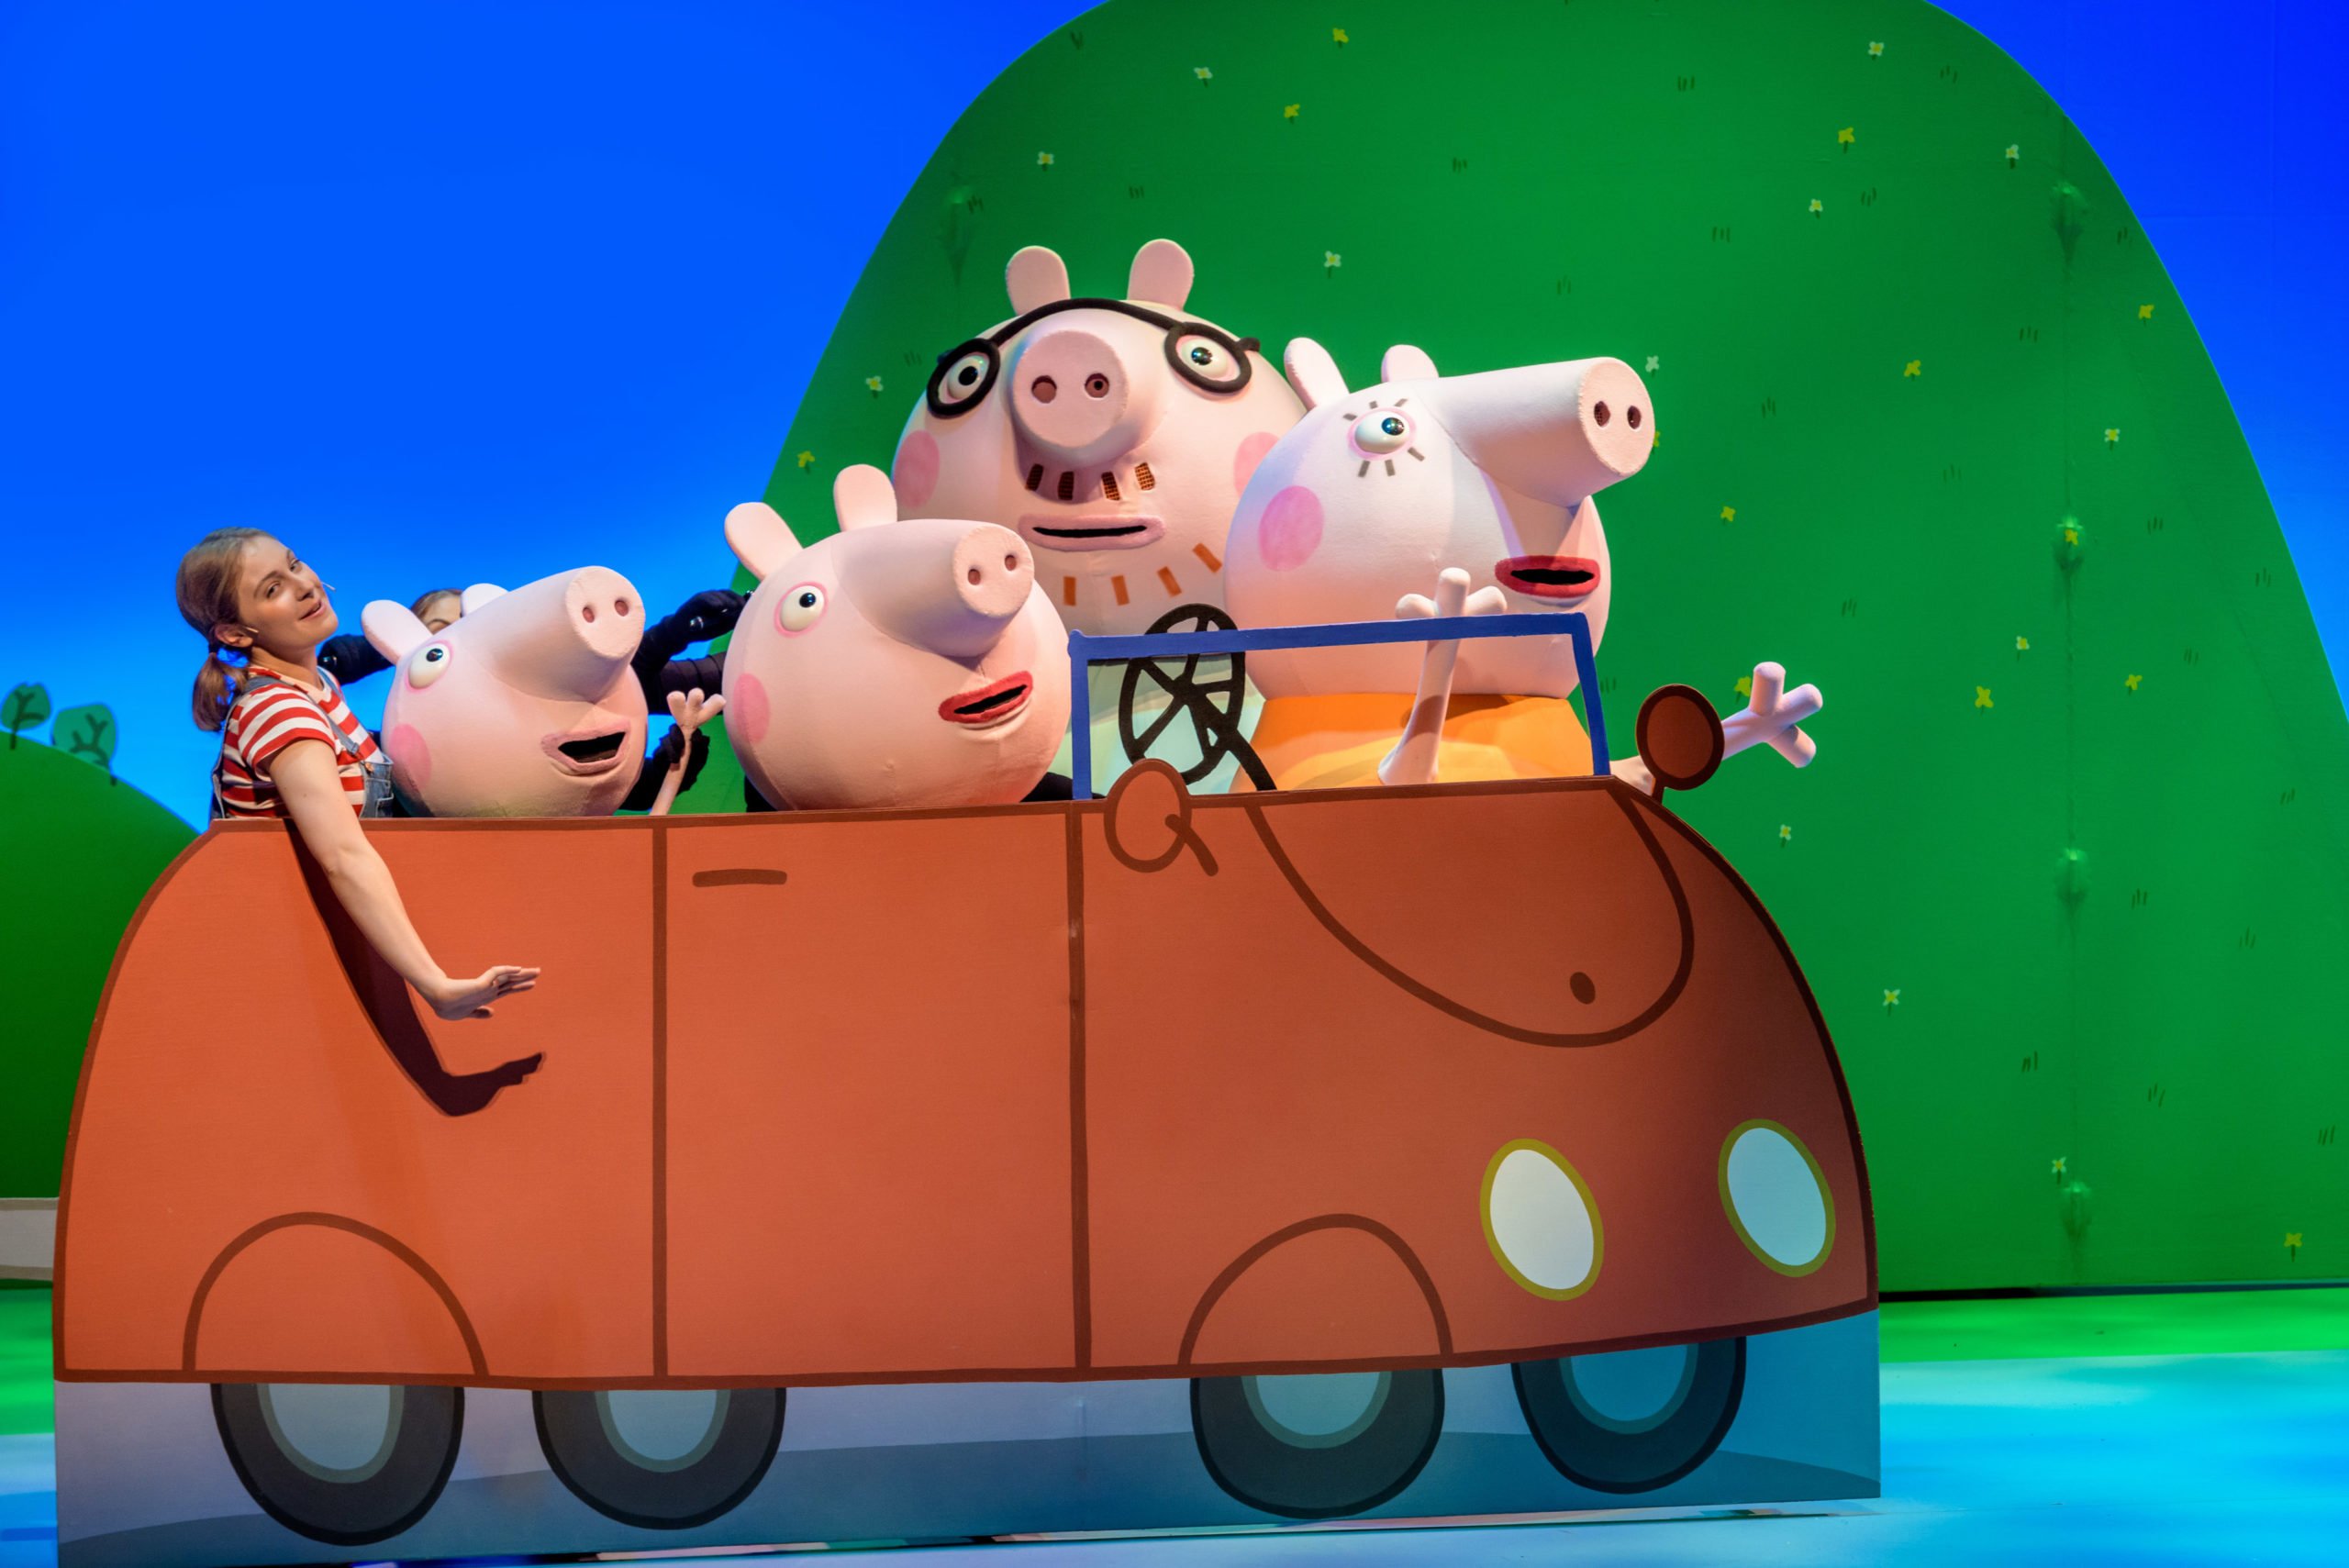 Peppa Pig Live! returns to Milton Keynes Theatre